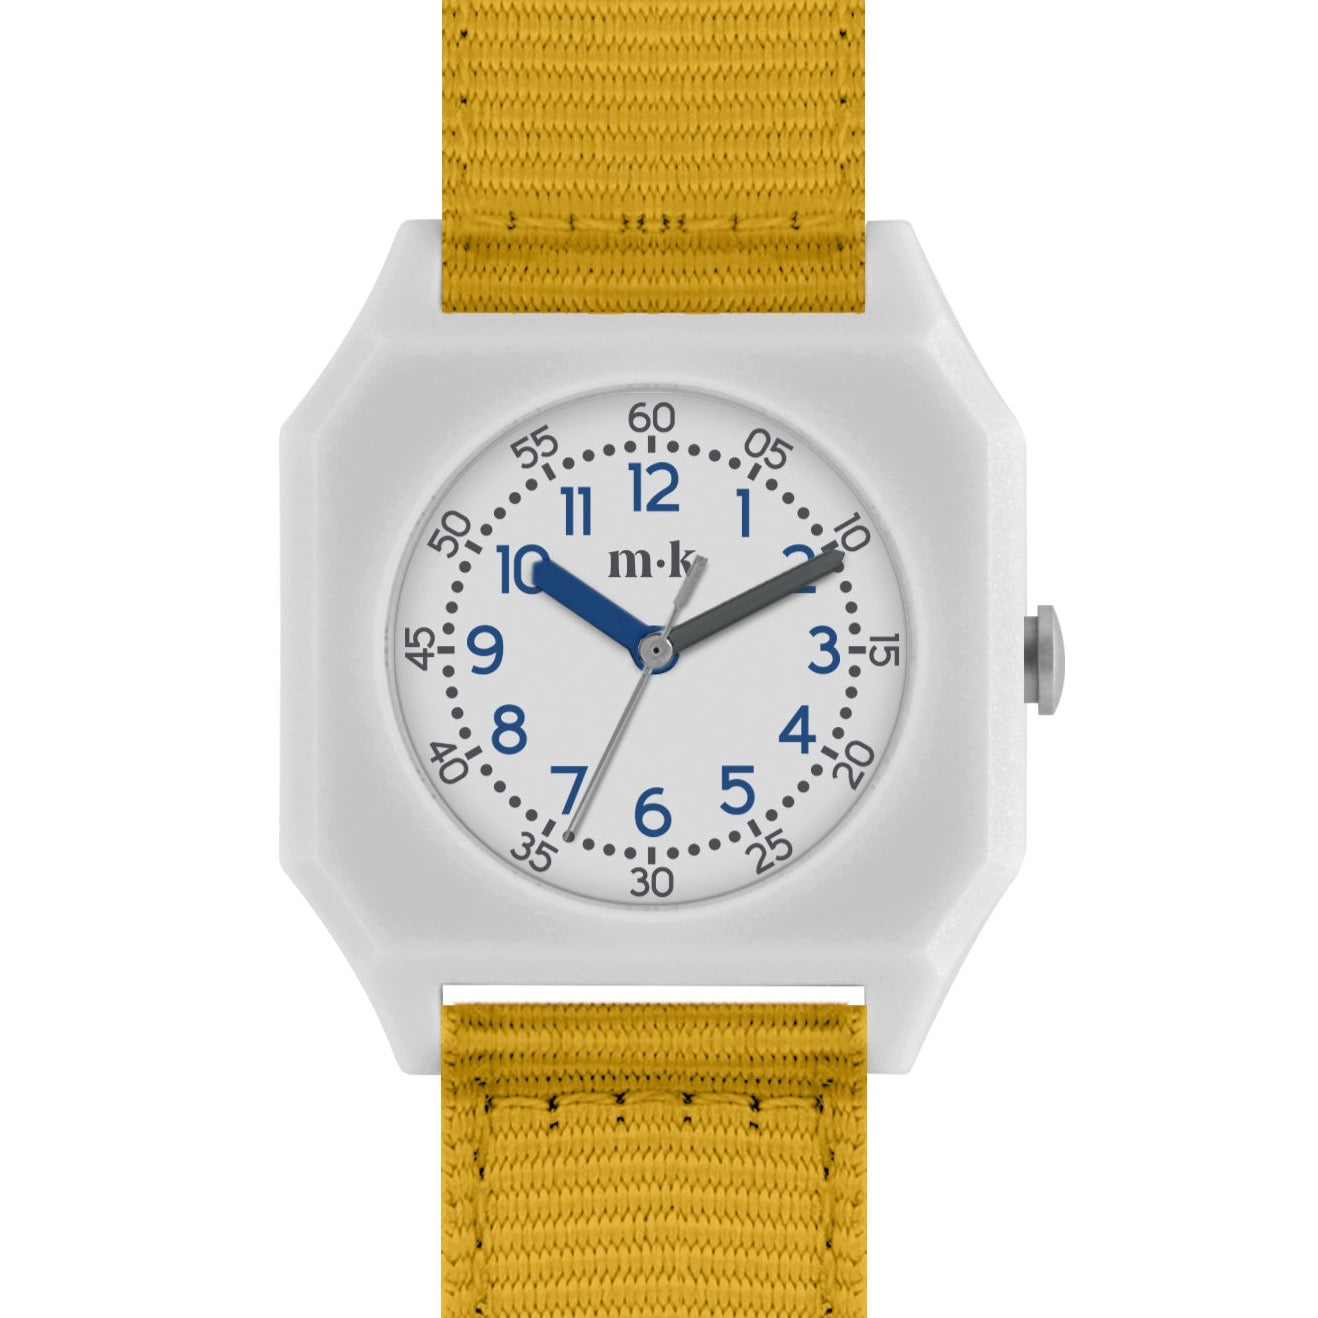 Mini Kyomo Honey eco-friendly watch